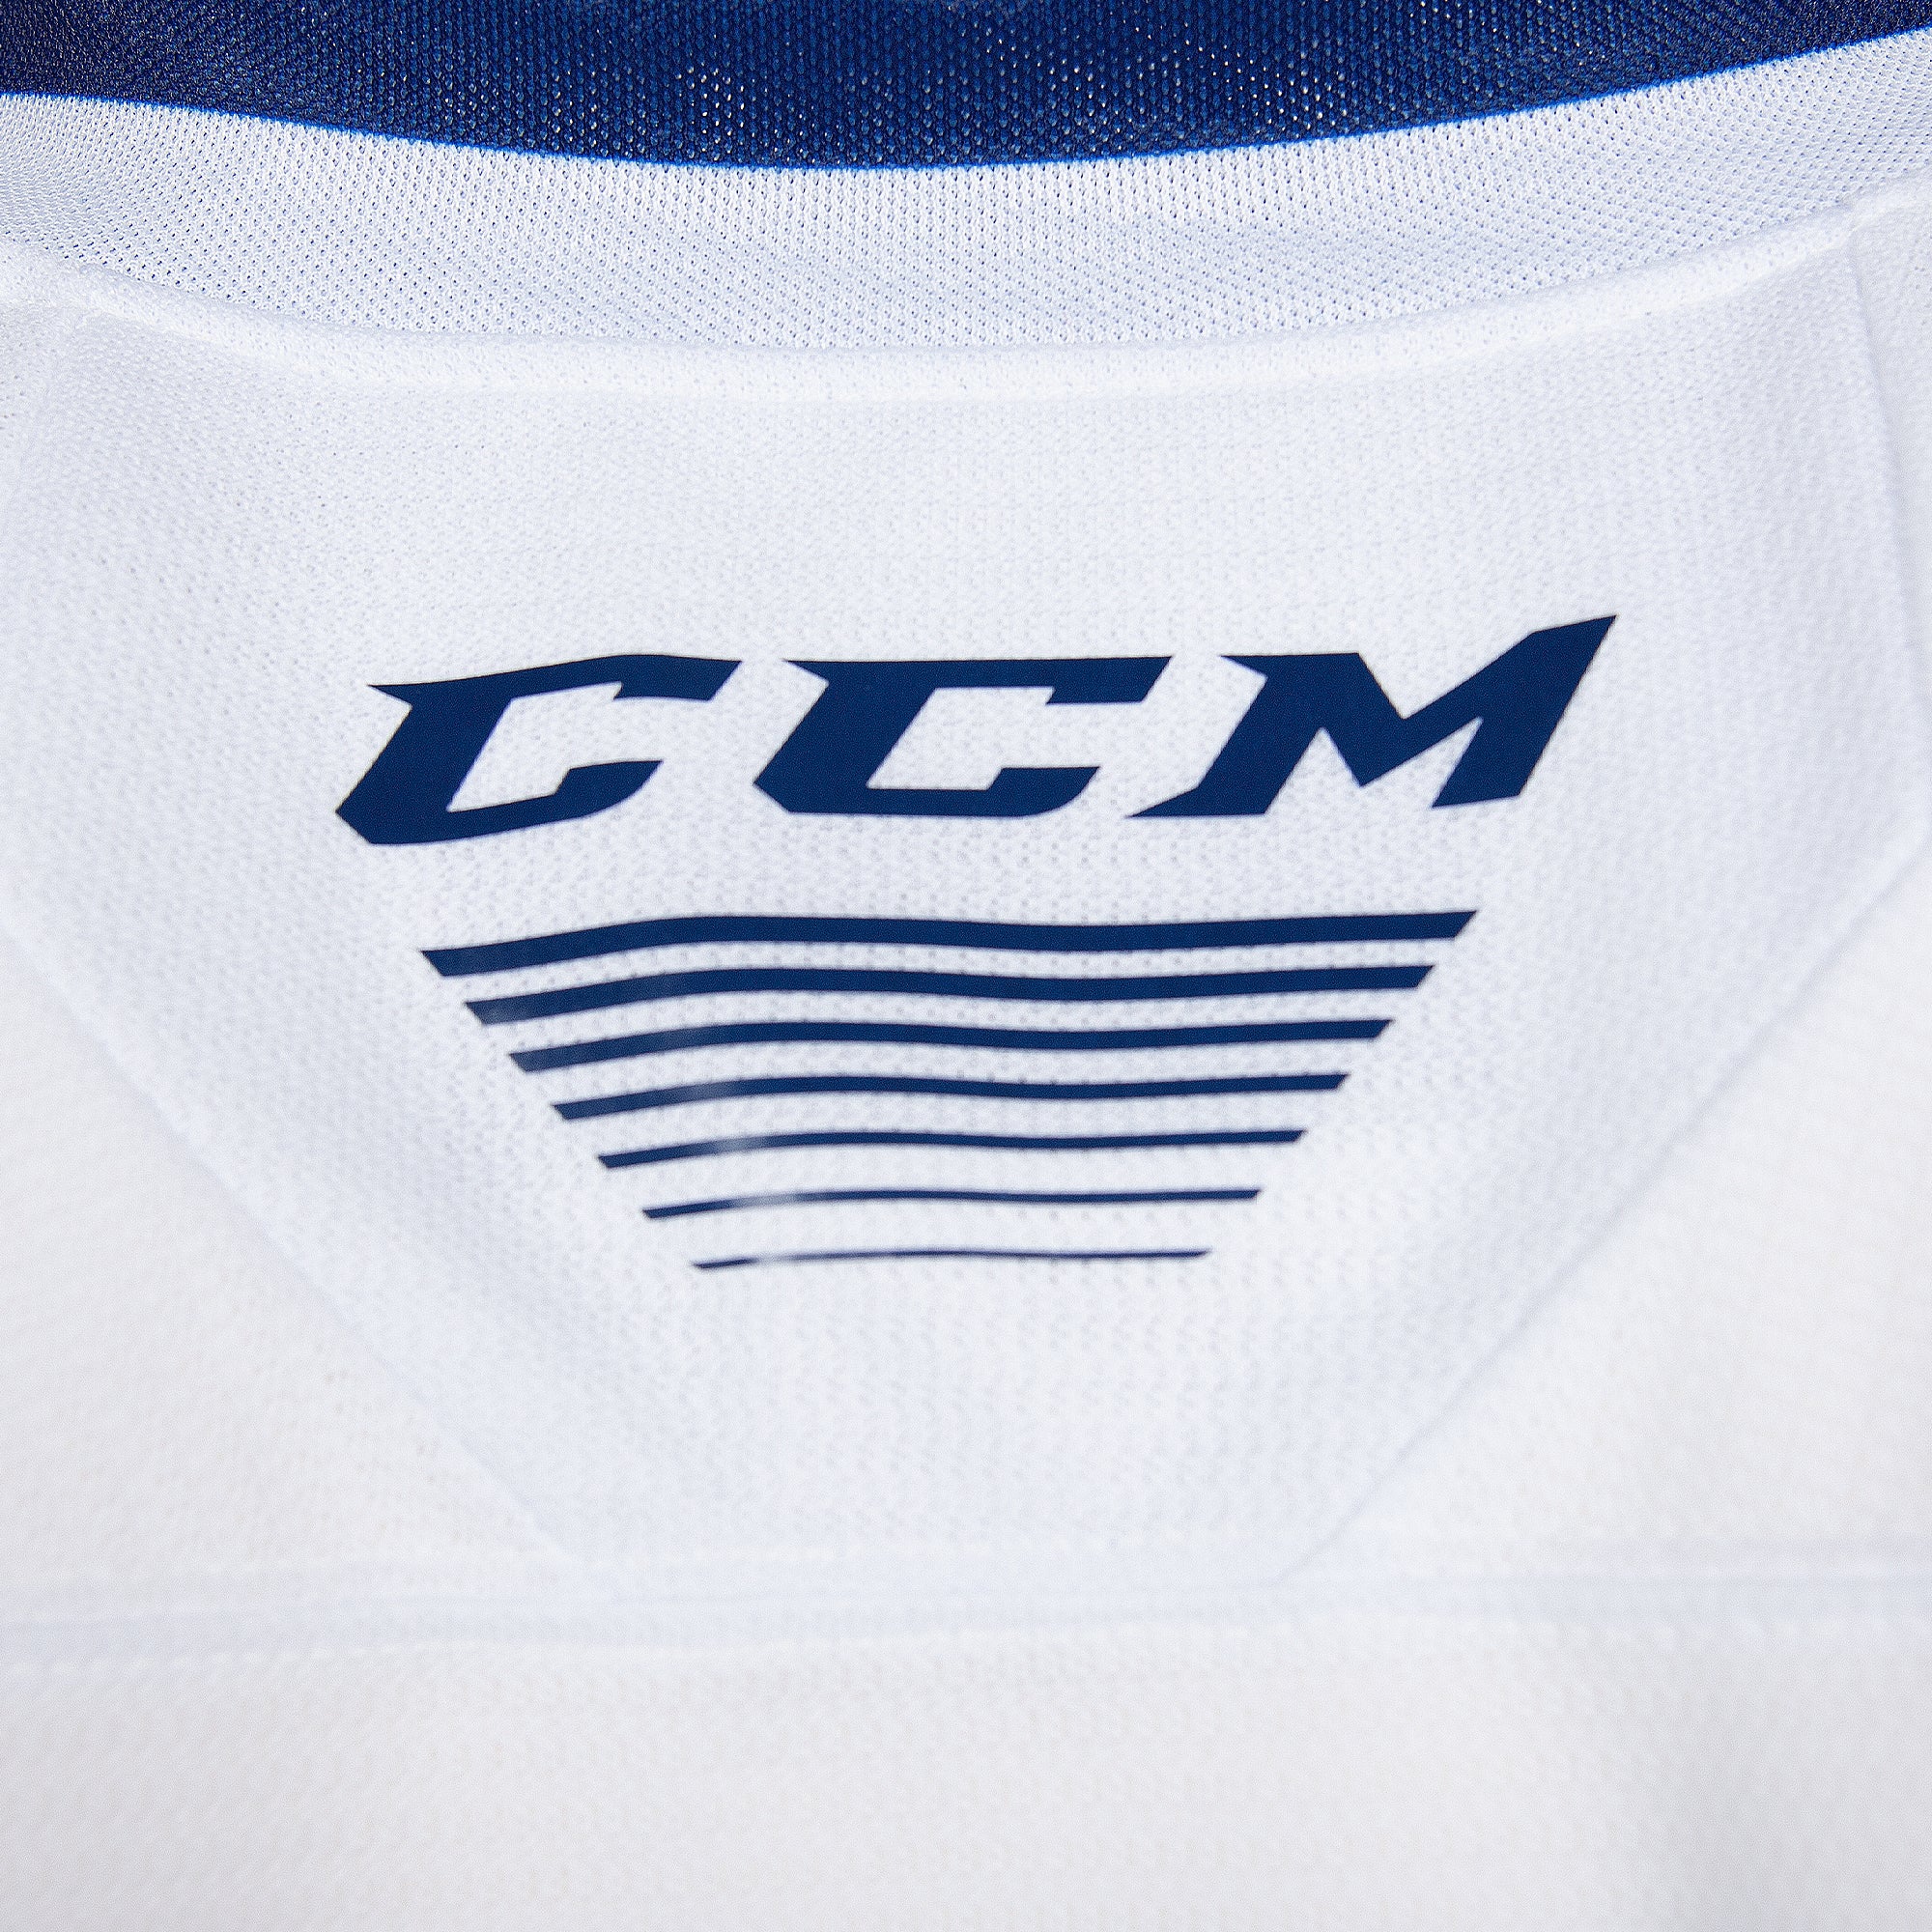 Marlies CCM Men's Premier Replica Jersey - White – shop.realsports